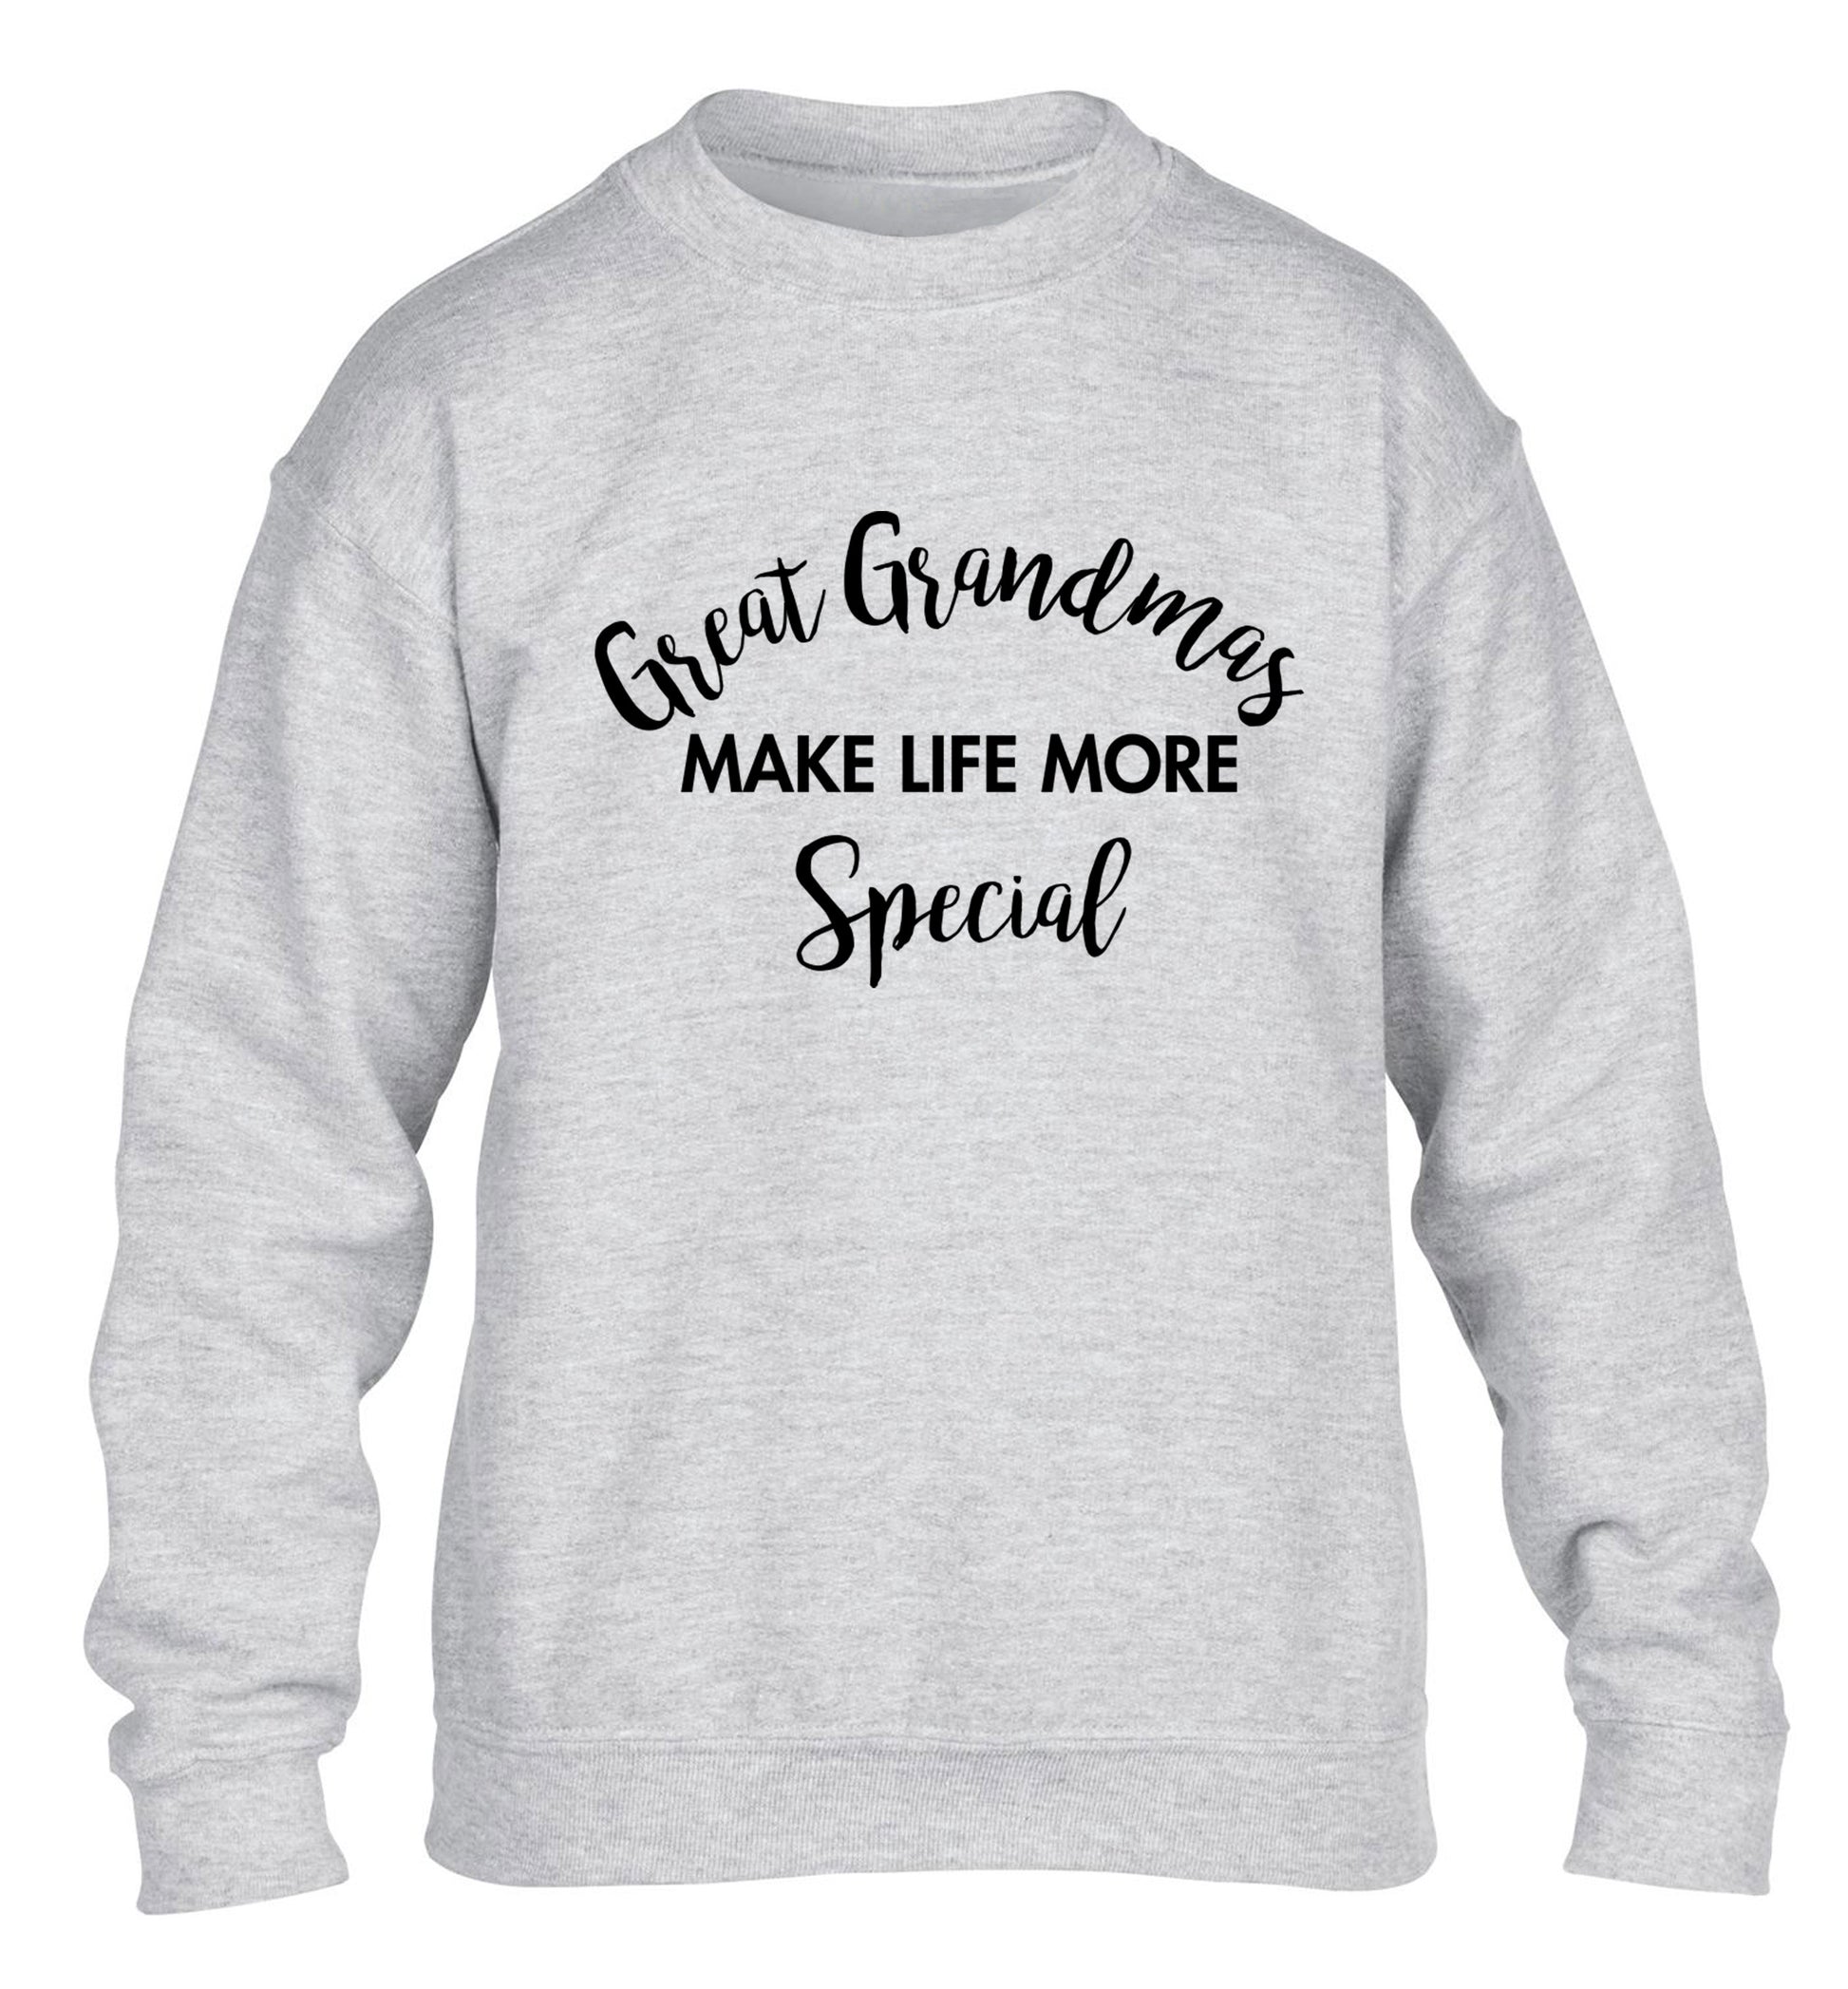 Great Grandmas make life more special children's grey sweater 12-14 Years